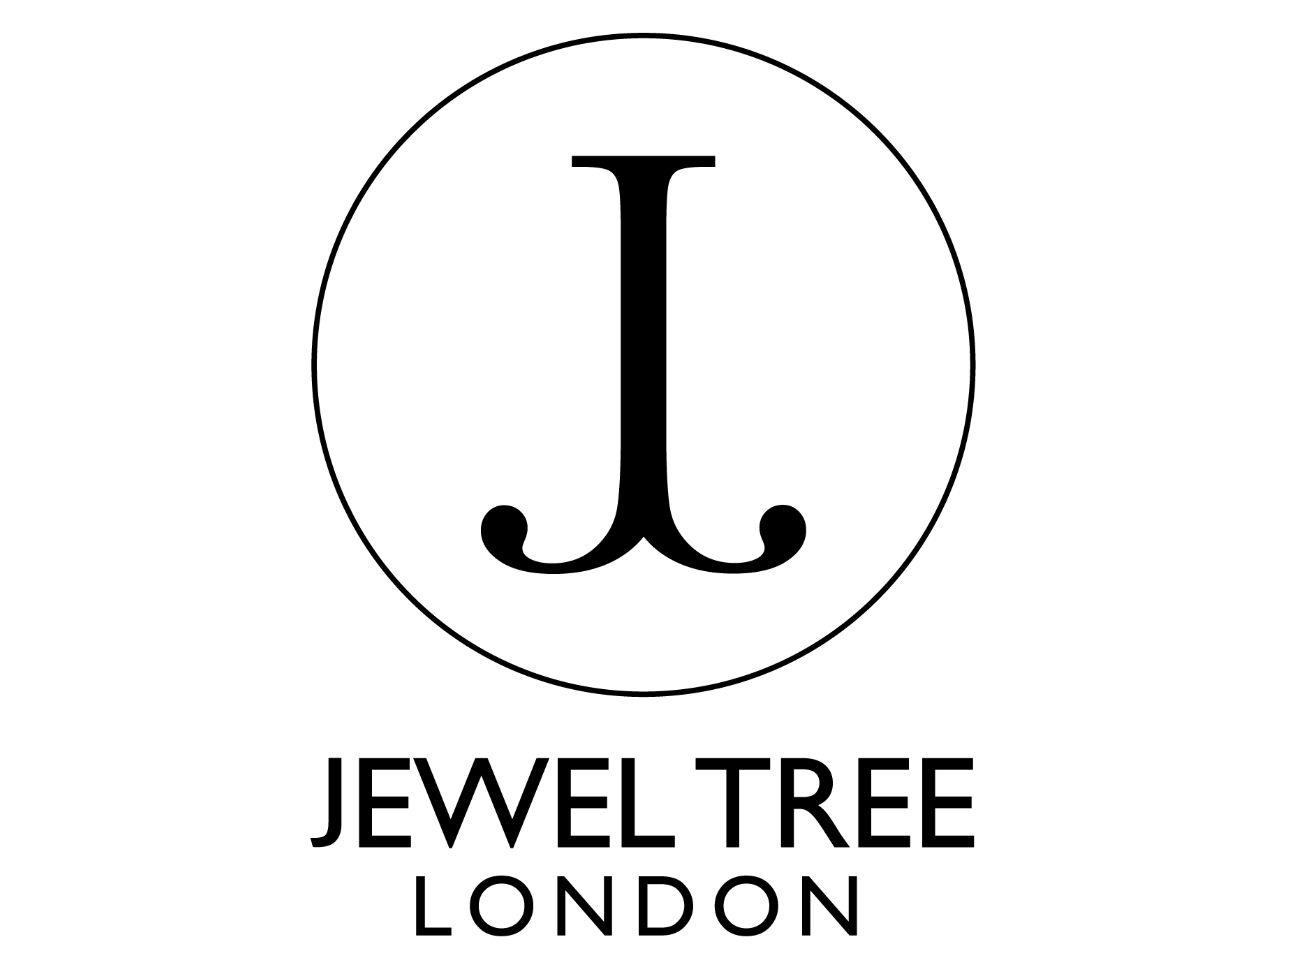 Jewel Tree London brand logo